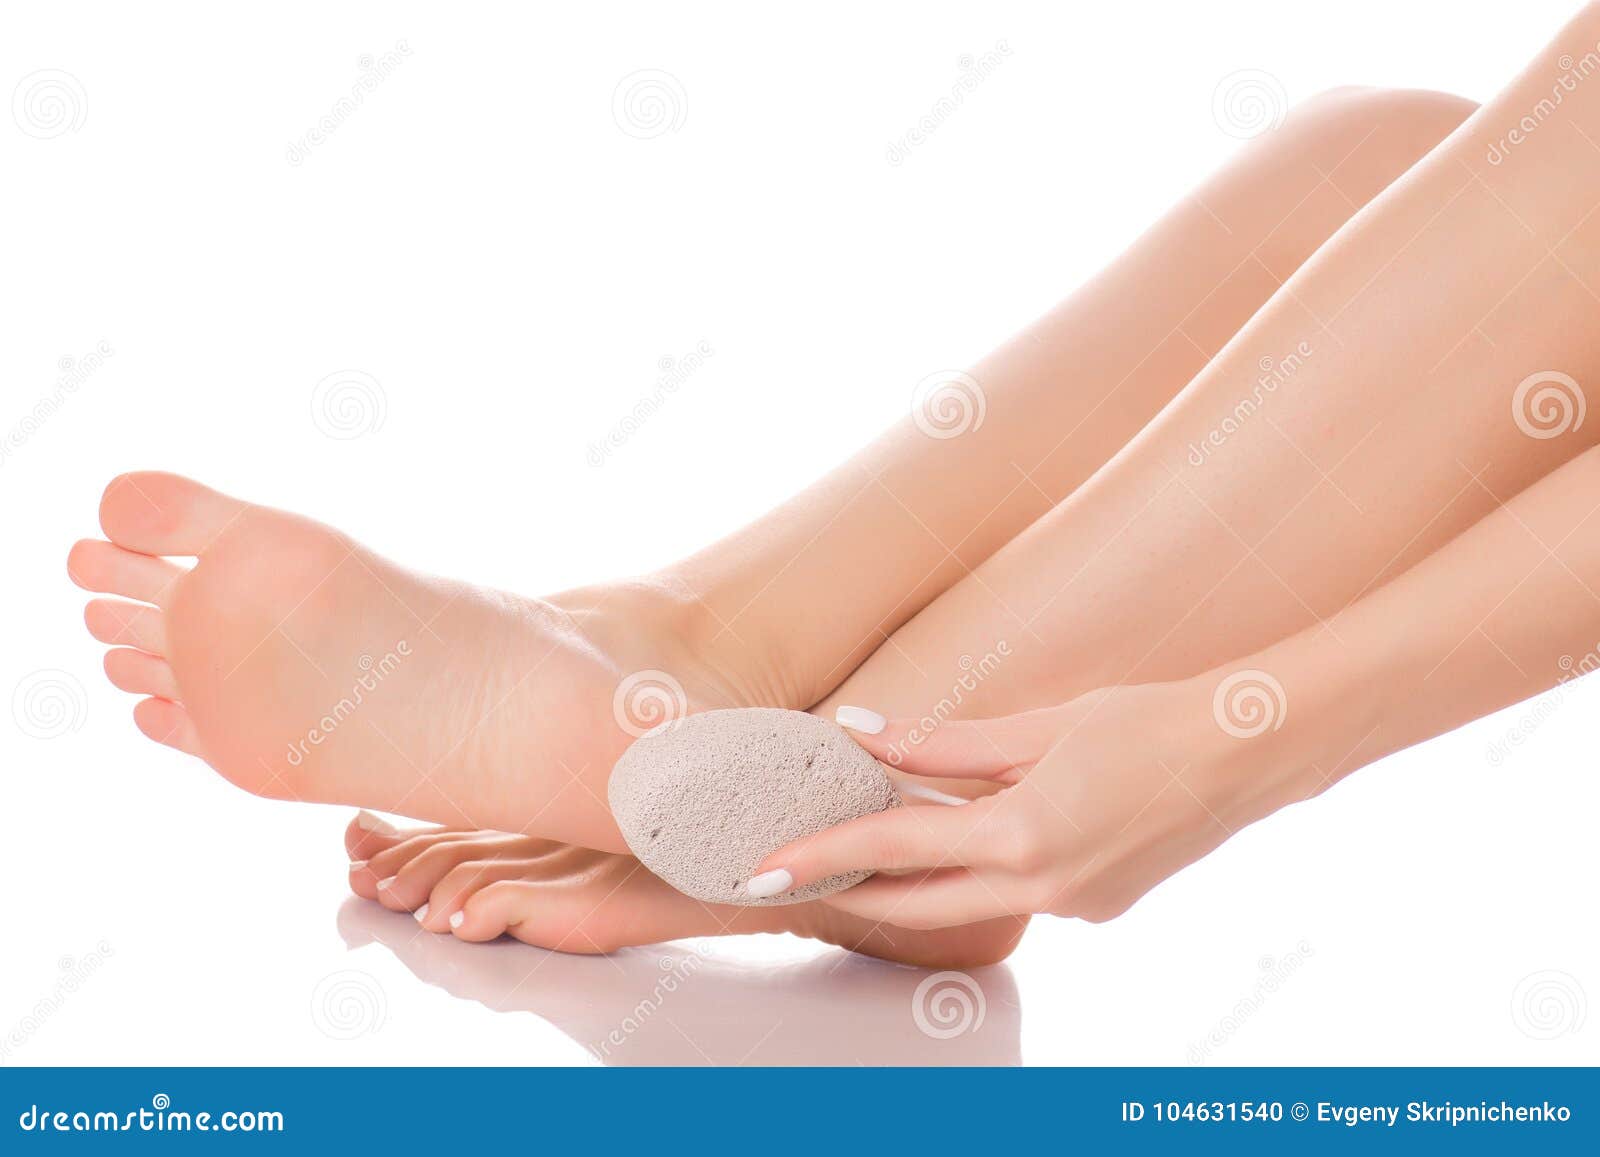 female feet heel stone pumice